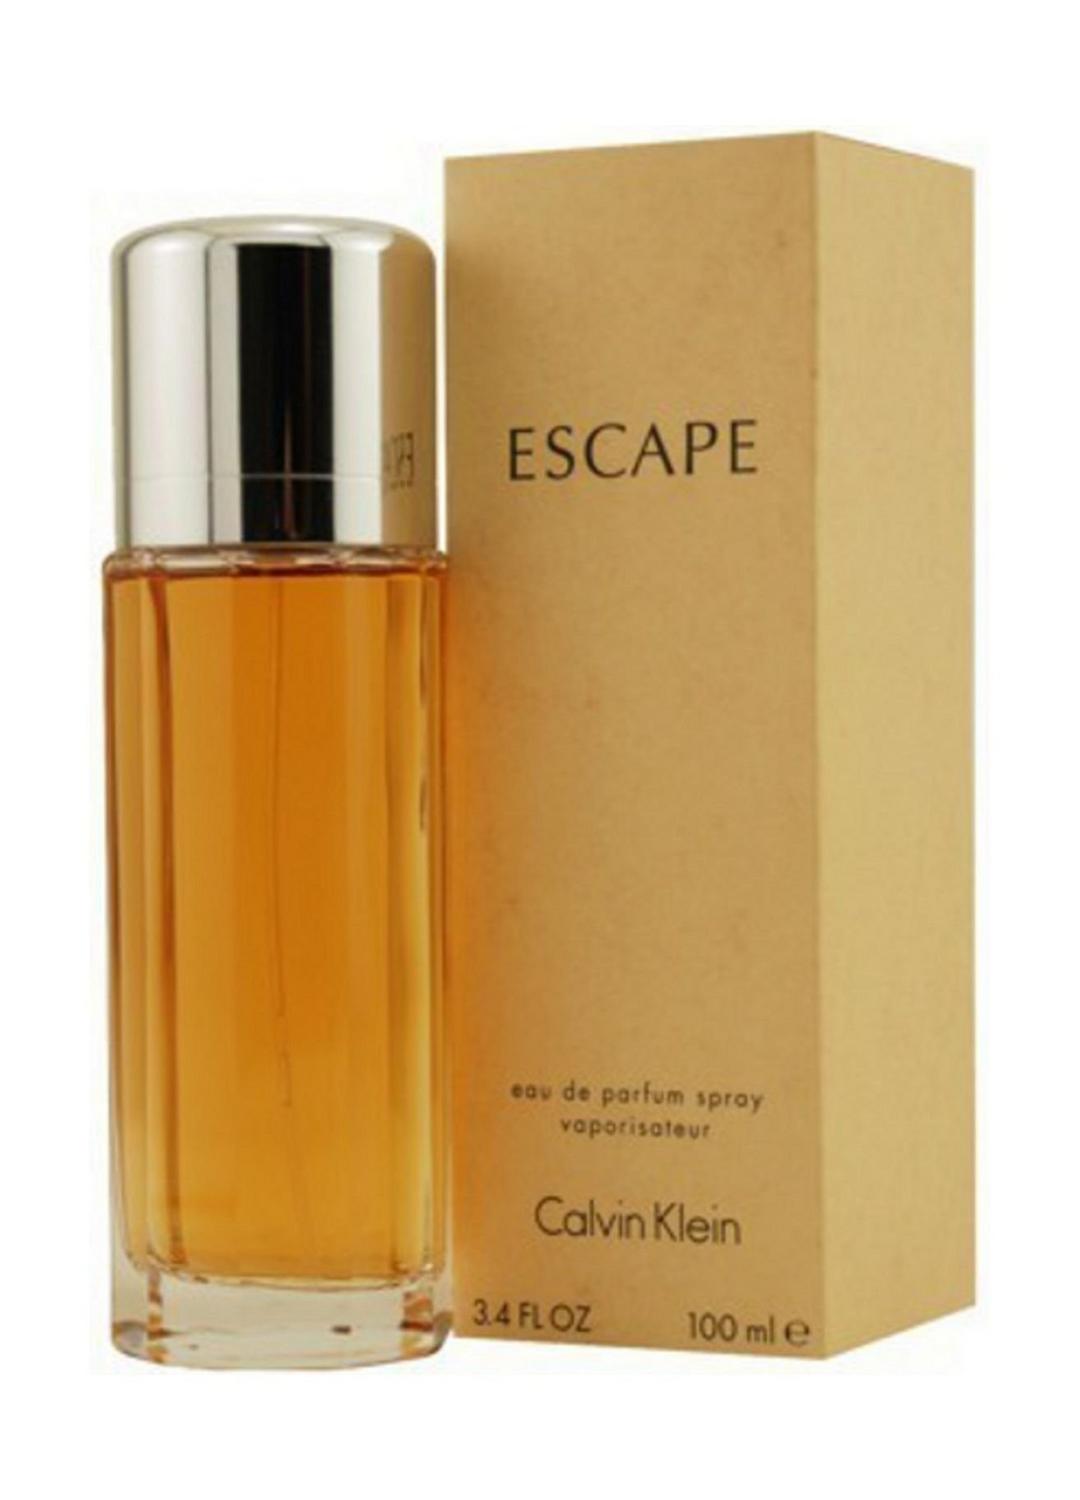 CALVIN KLEIN Escape - Eau de Parfum 100 ml